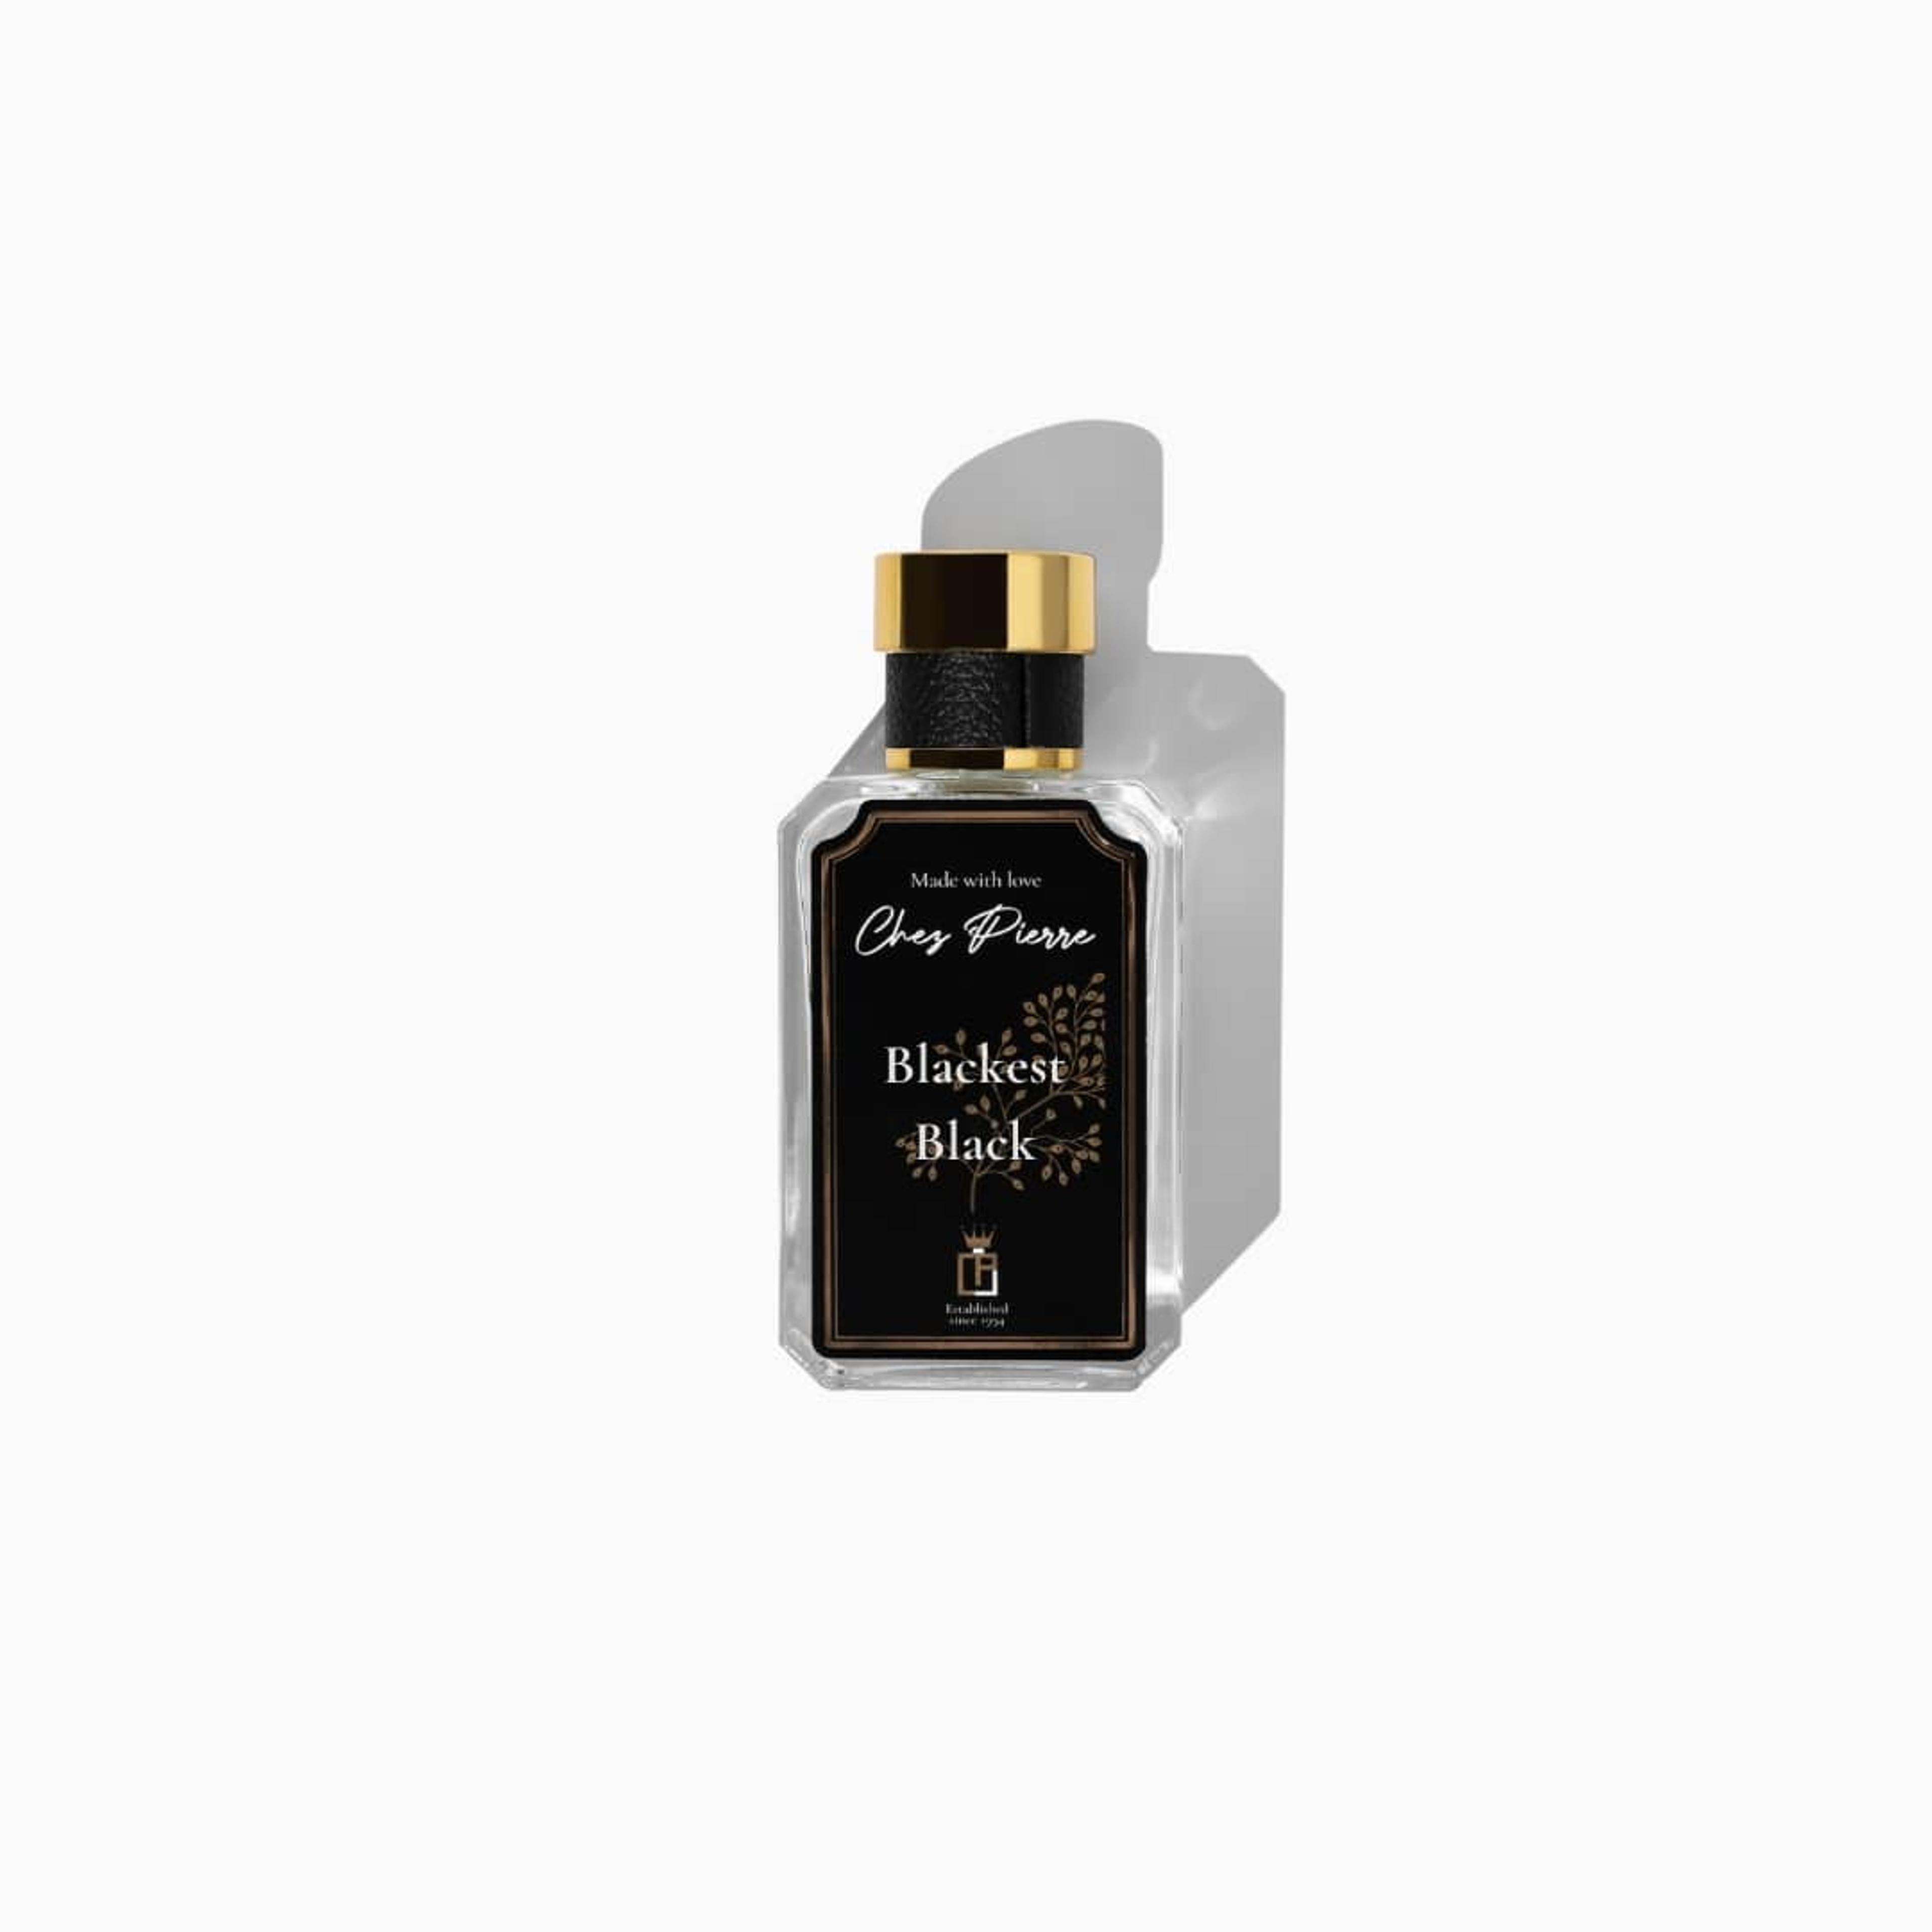 Chez Pierre's Blackest Black Perfume Inspired By Tom Ford Noir de Noir